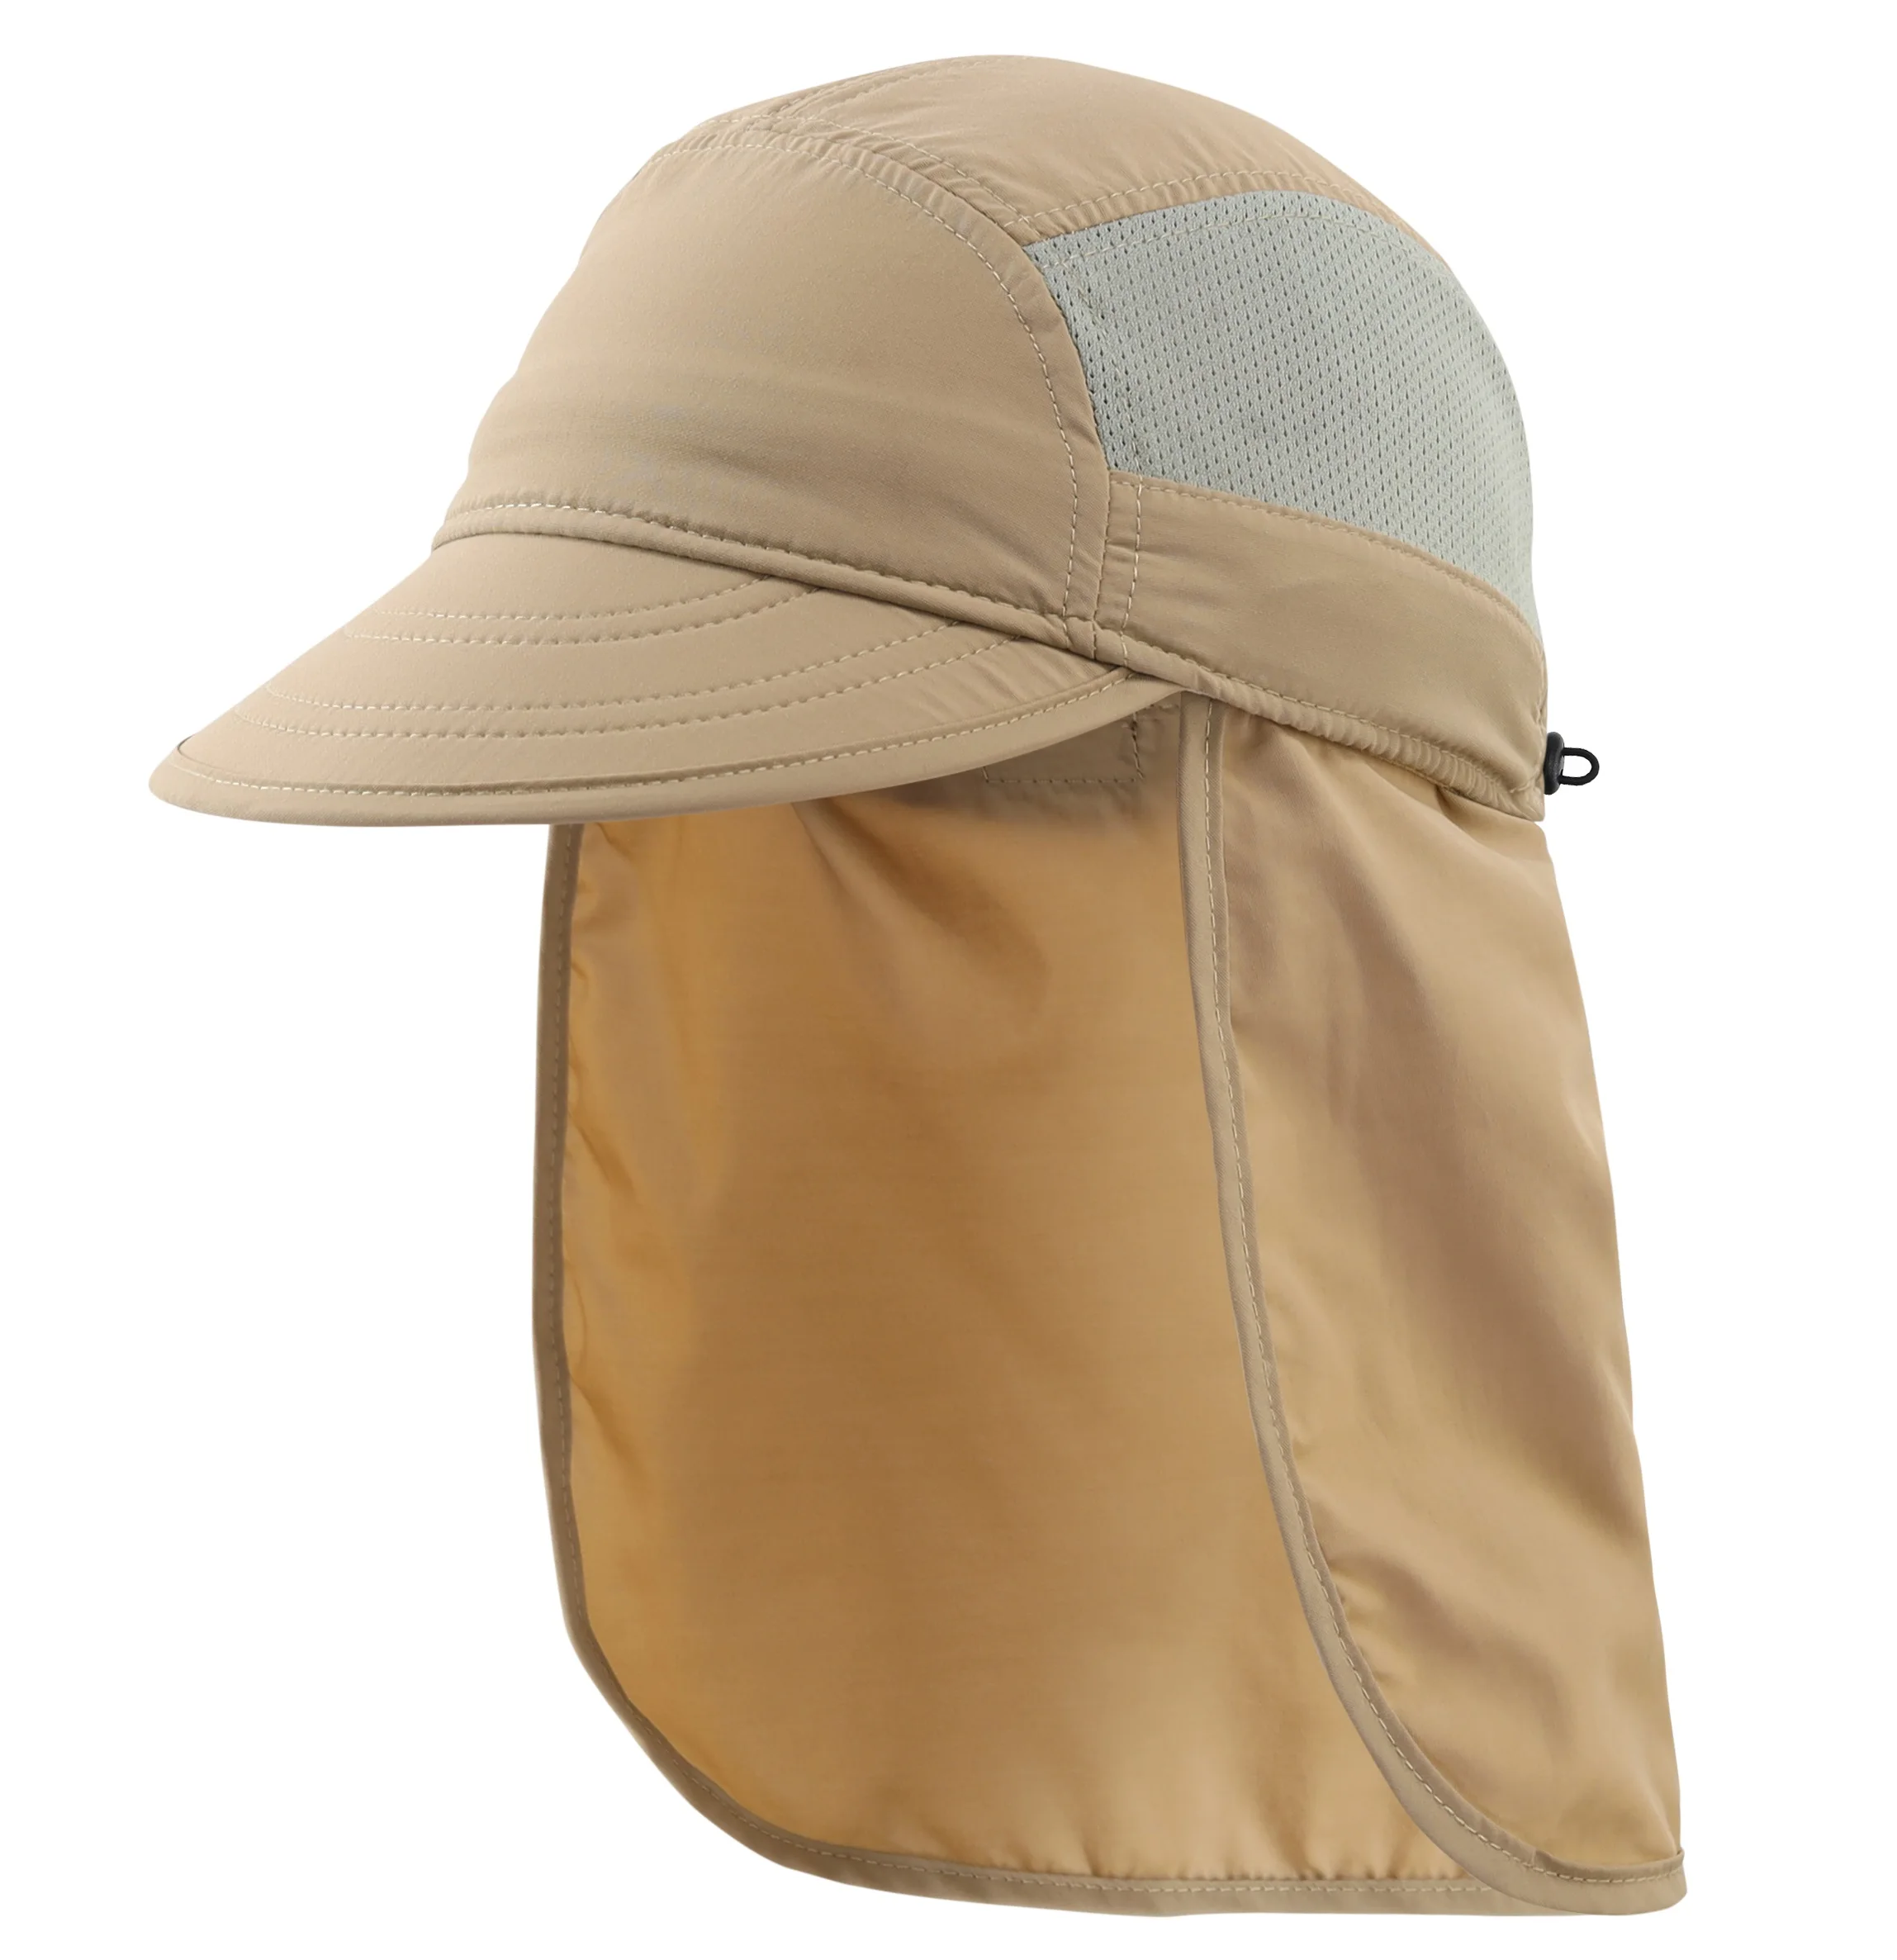 Quick-dry Sun Protection UV Fisherman Hat Foldable Windproof Sun